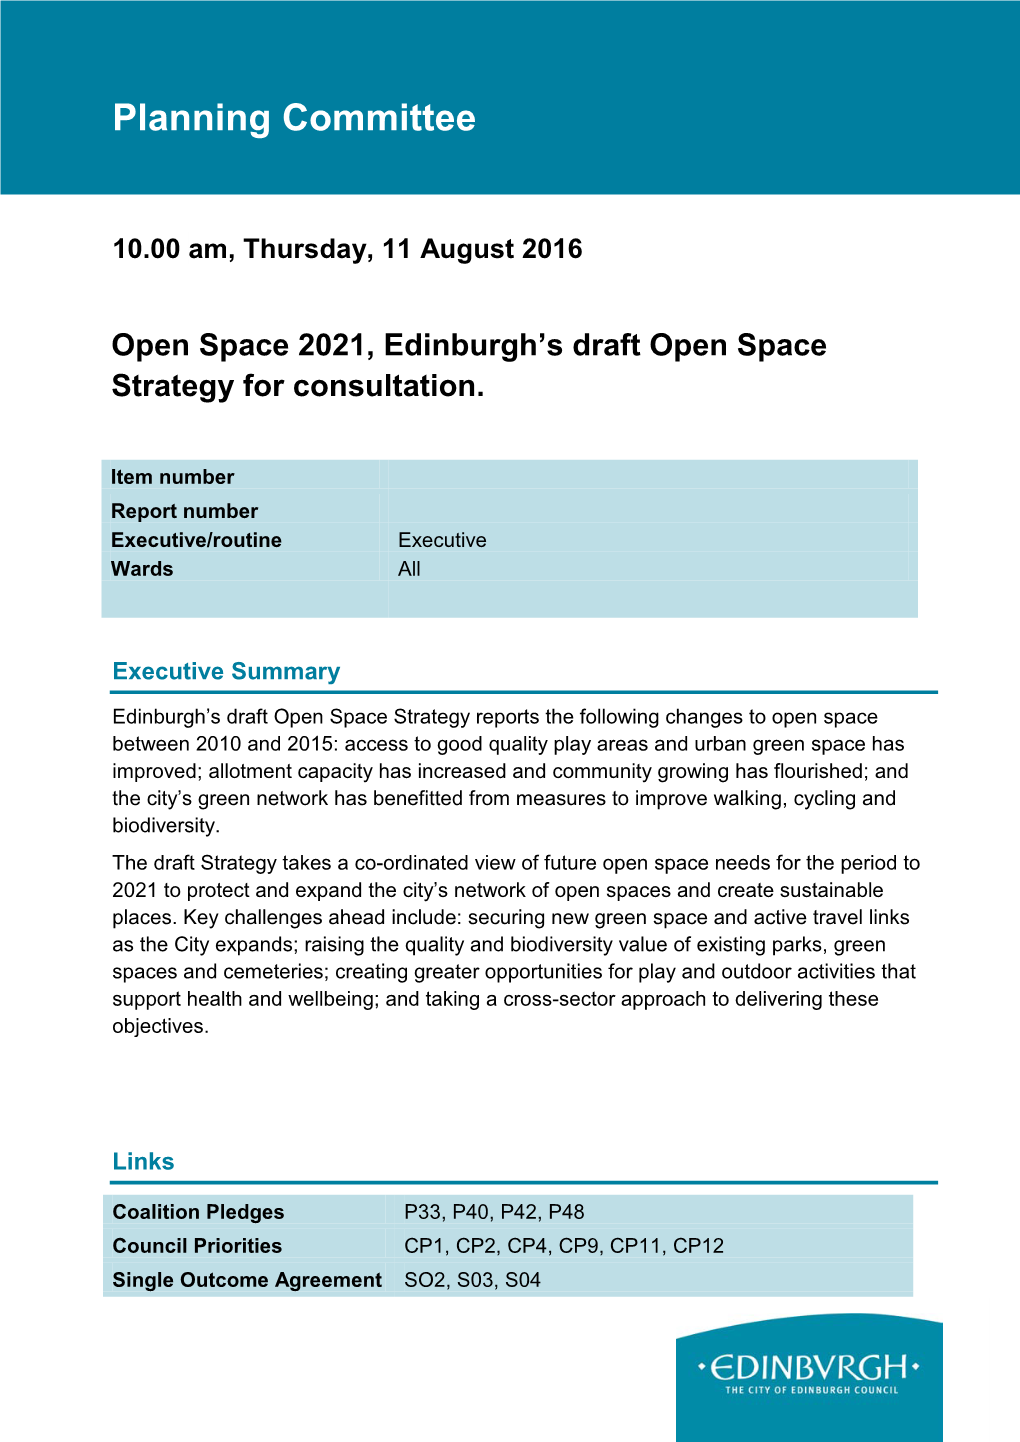 Open Space 2021, Edinburgh's Draft